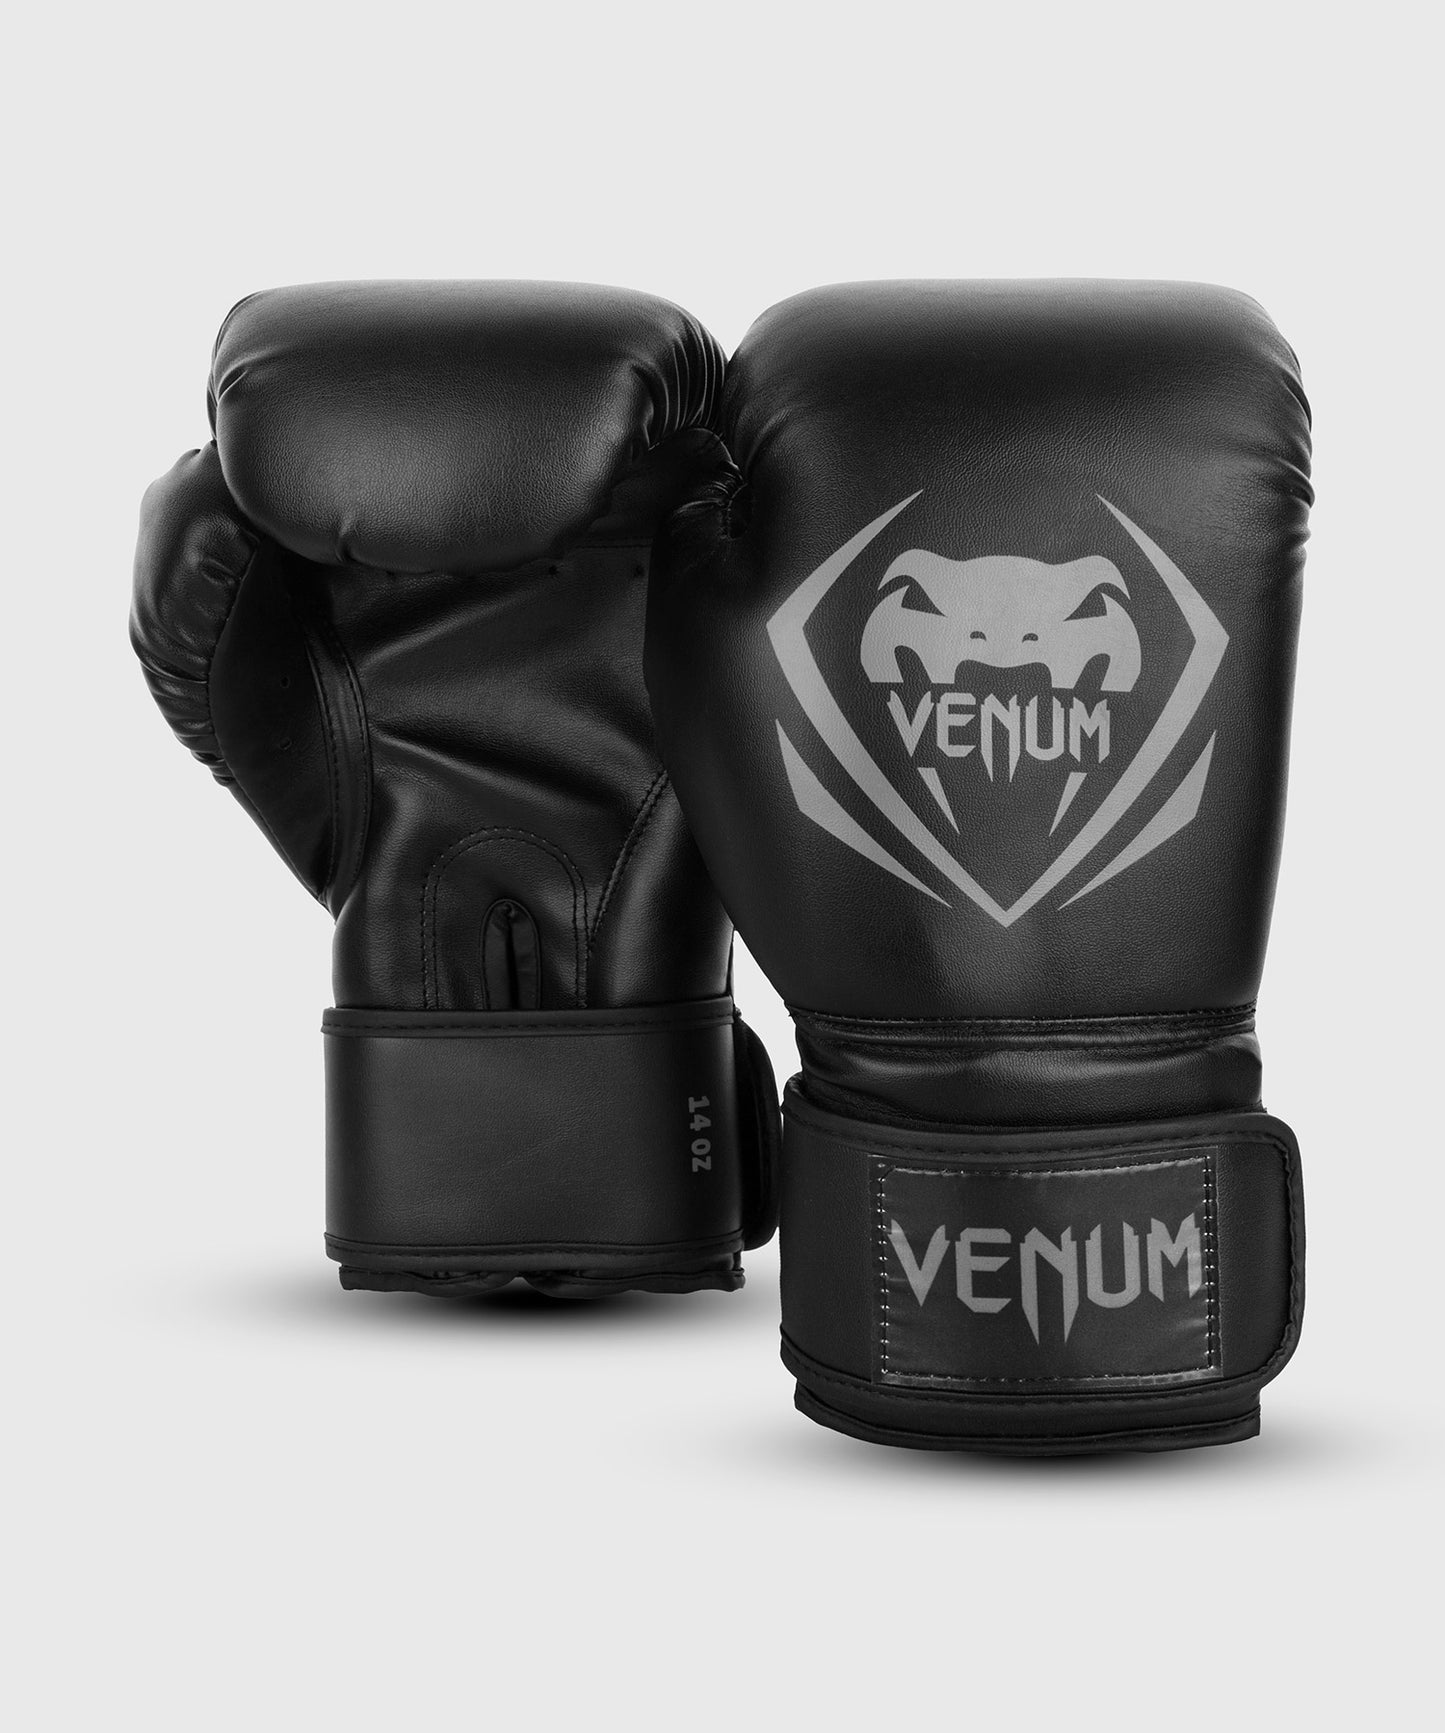 Venum Contender Boxing Gloves - Black/Grey